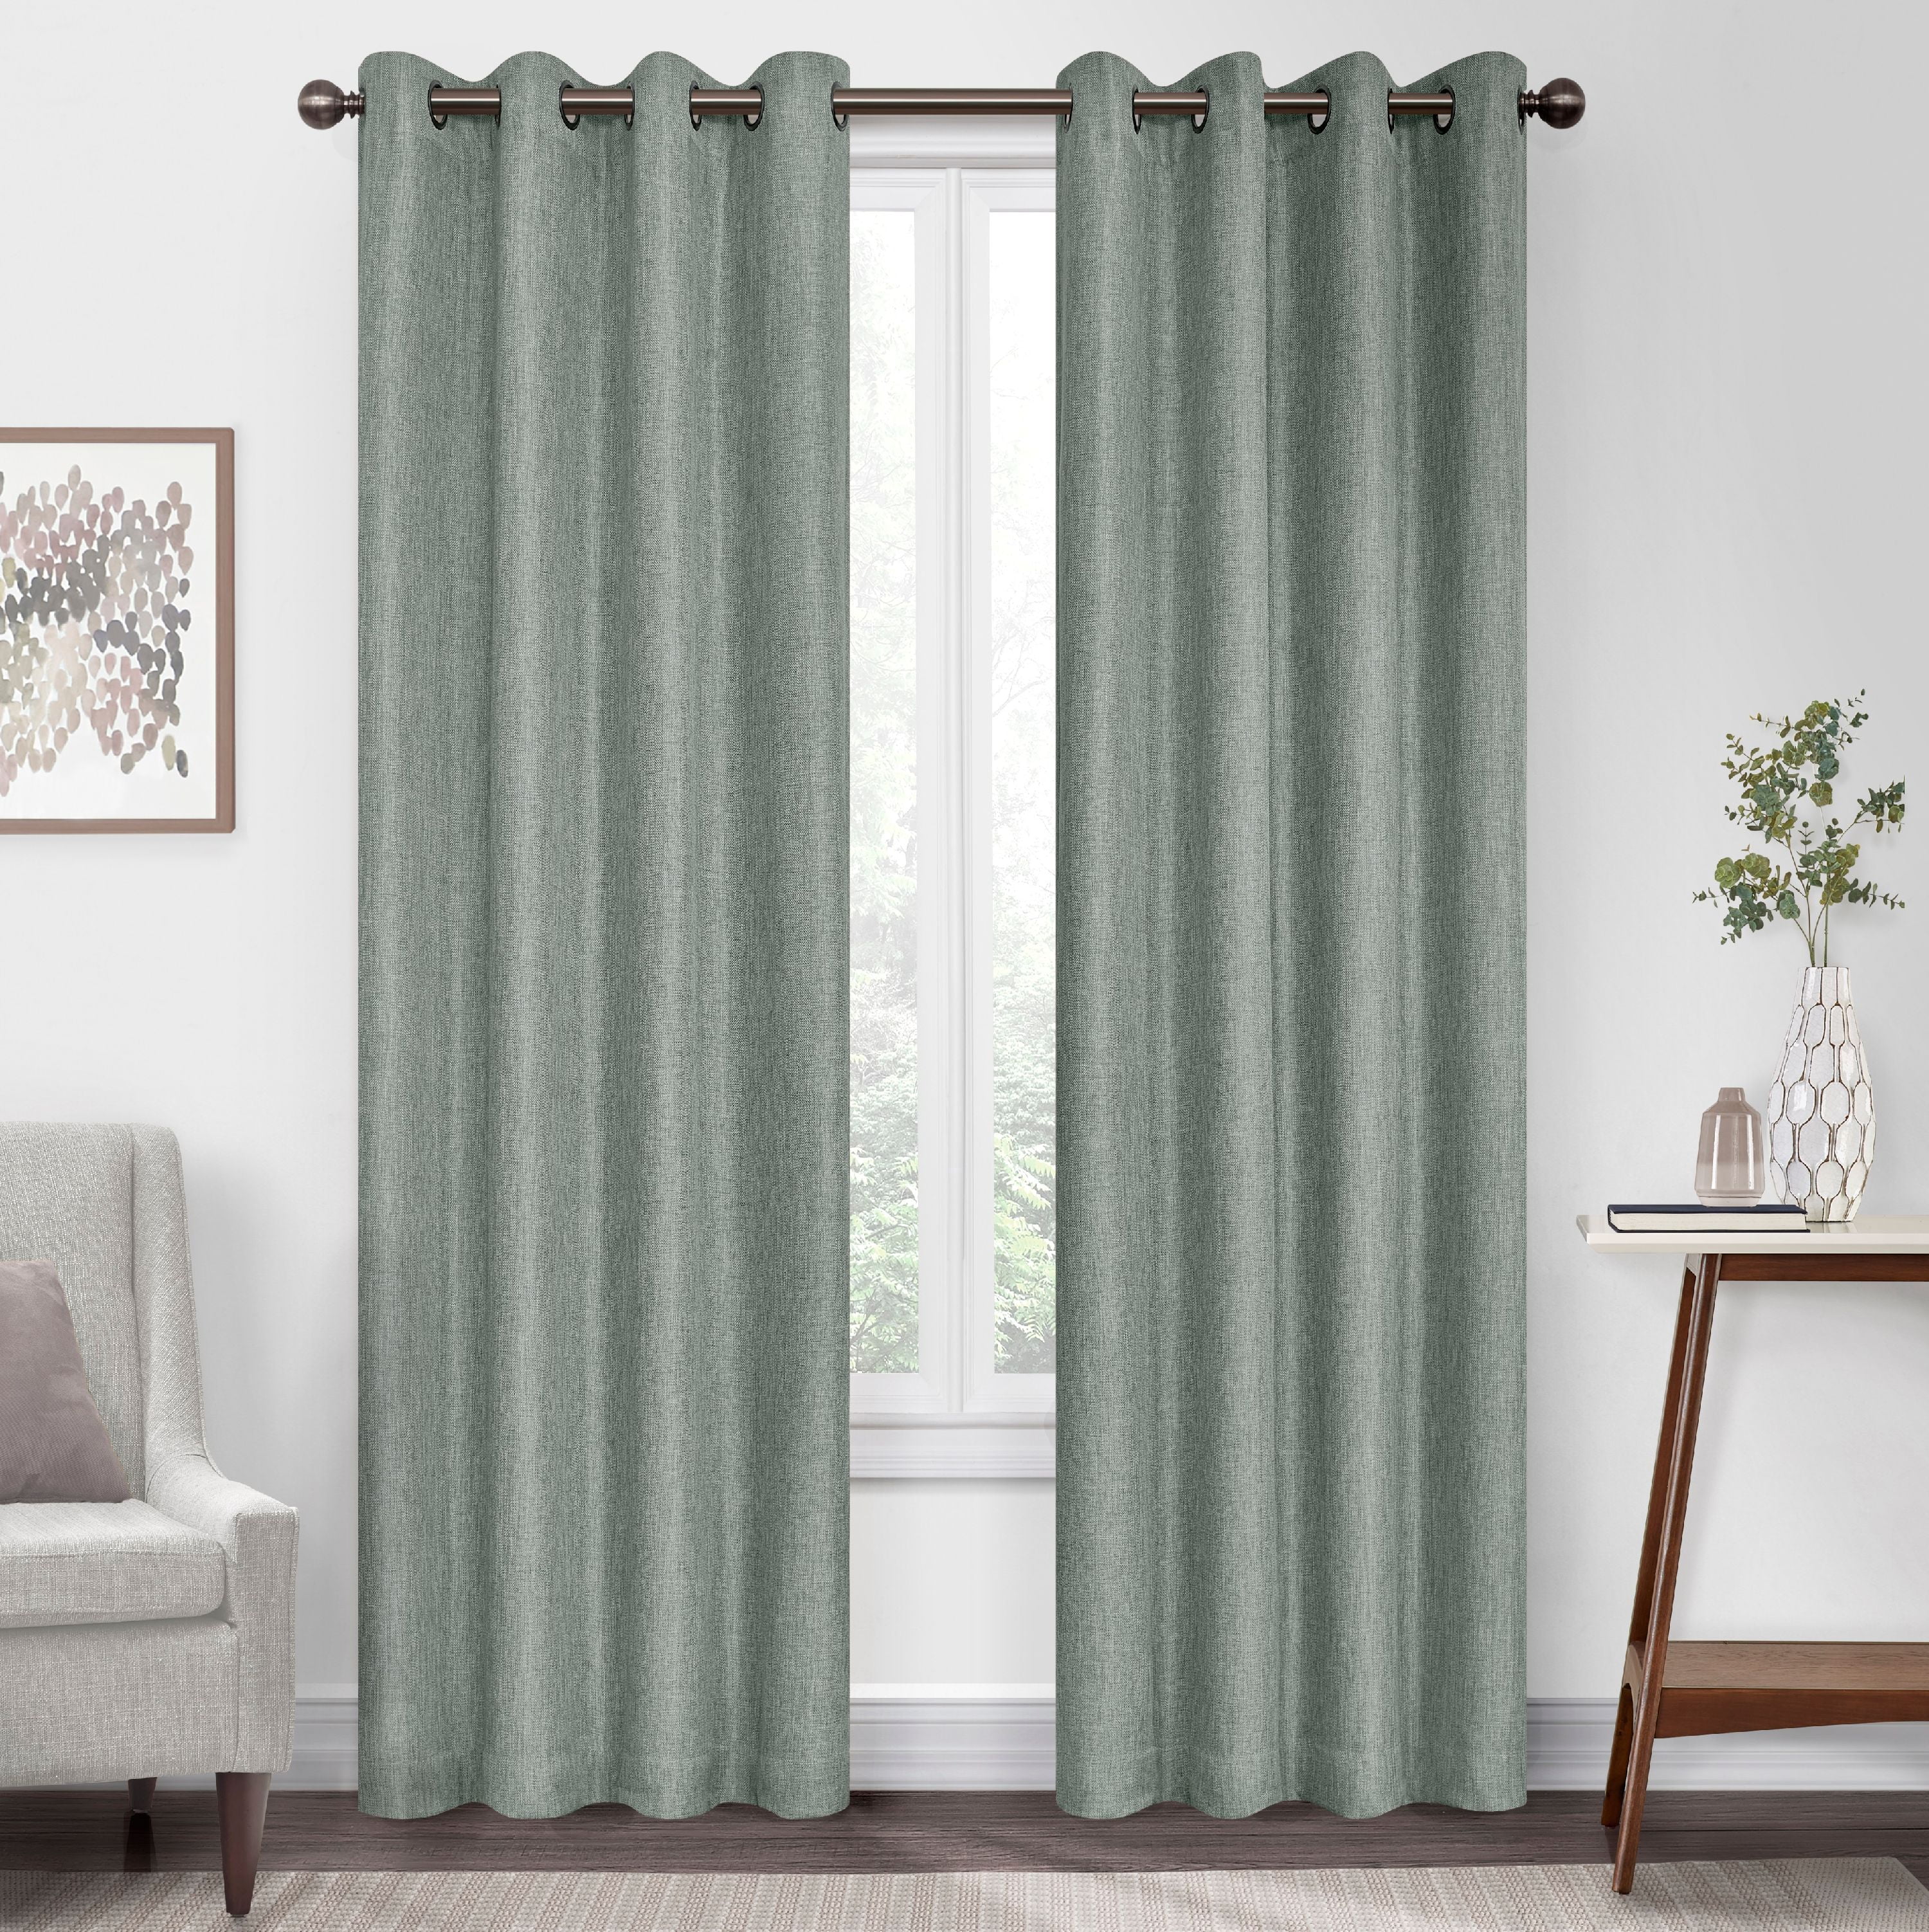 1 Panel Living Room Blackout Window Curtain Bedroom Drapes Grommet Celadon Green 